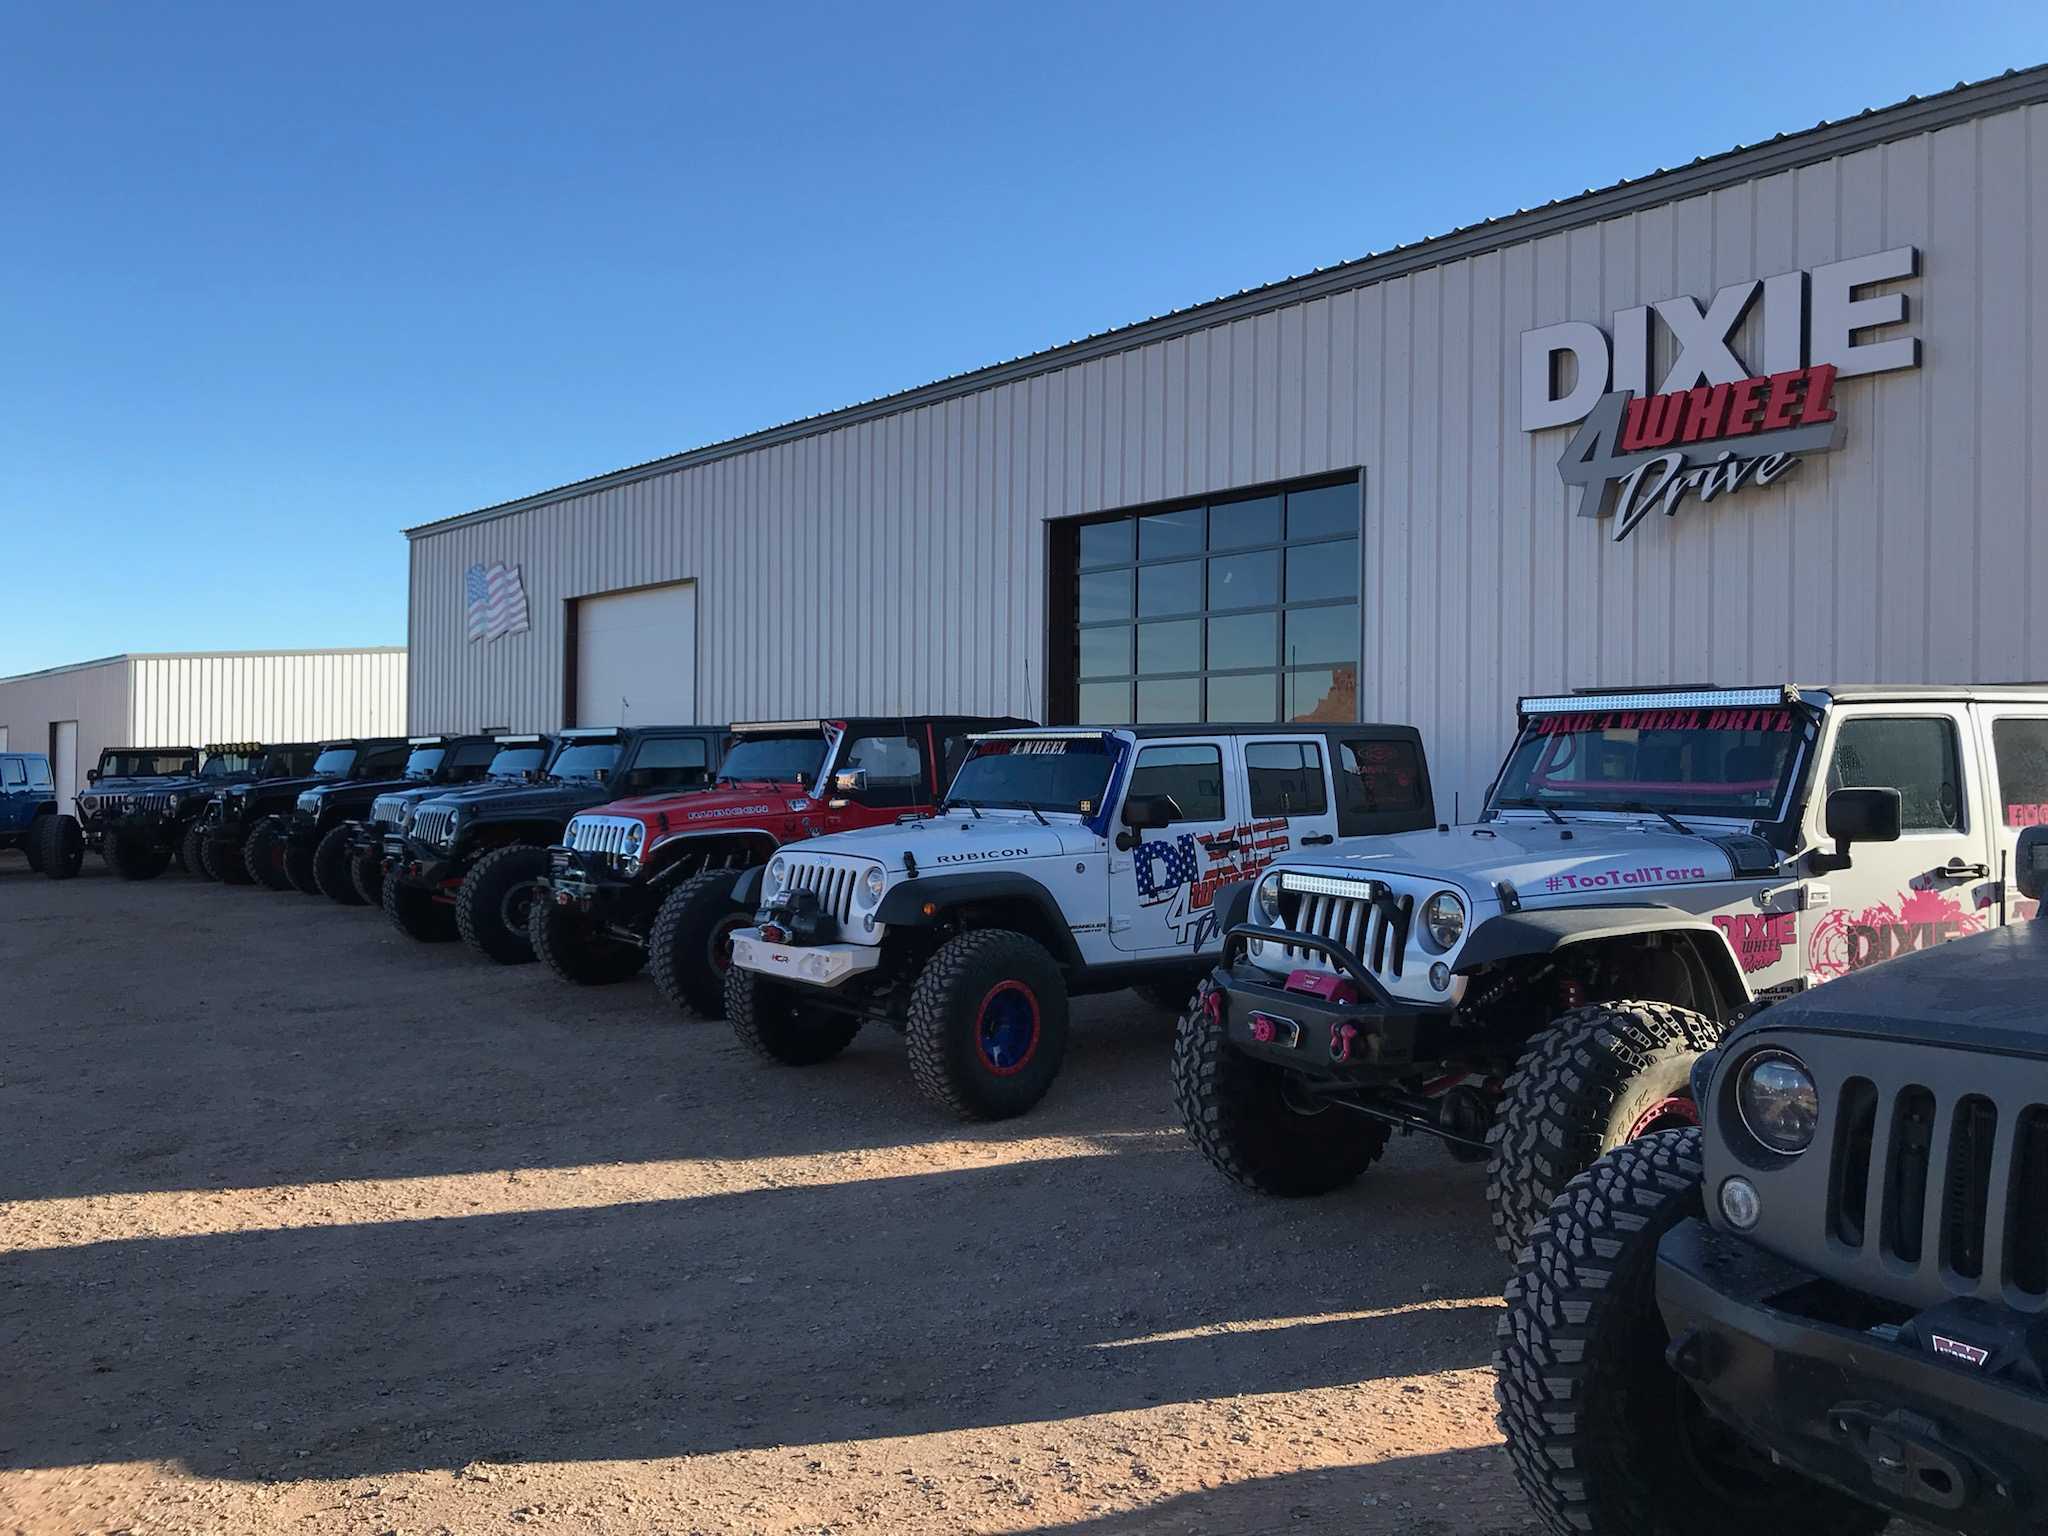 Dixie 4 Wheel Drive to Close Moab Facility | THE SHOP